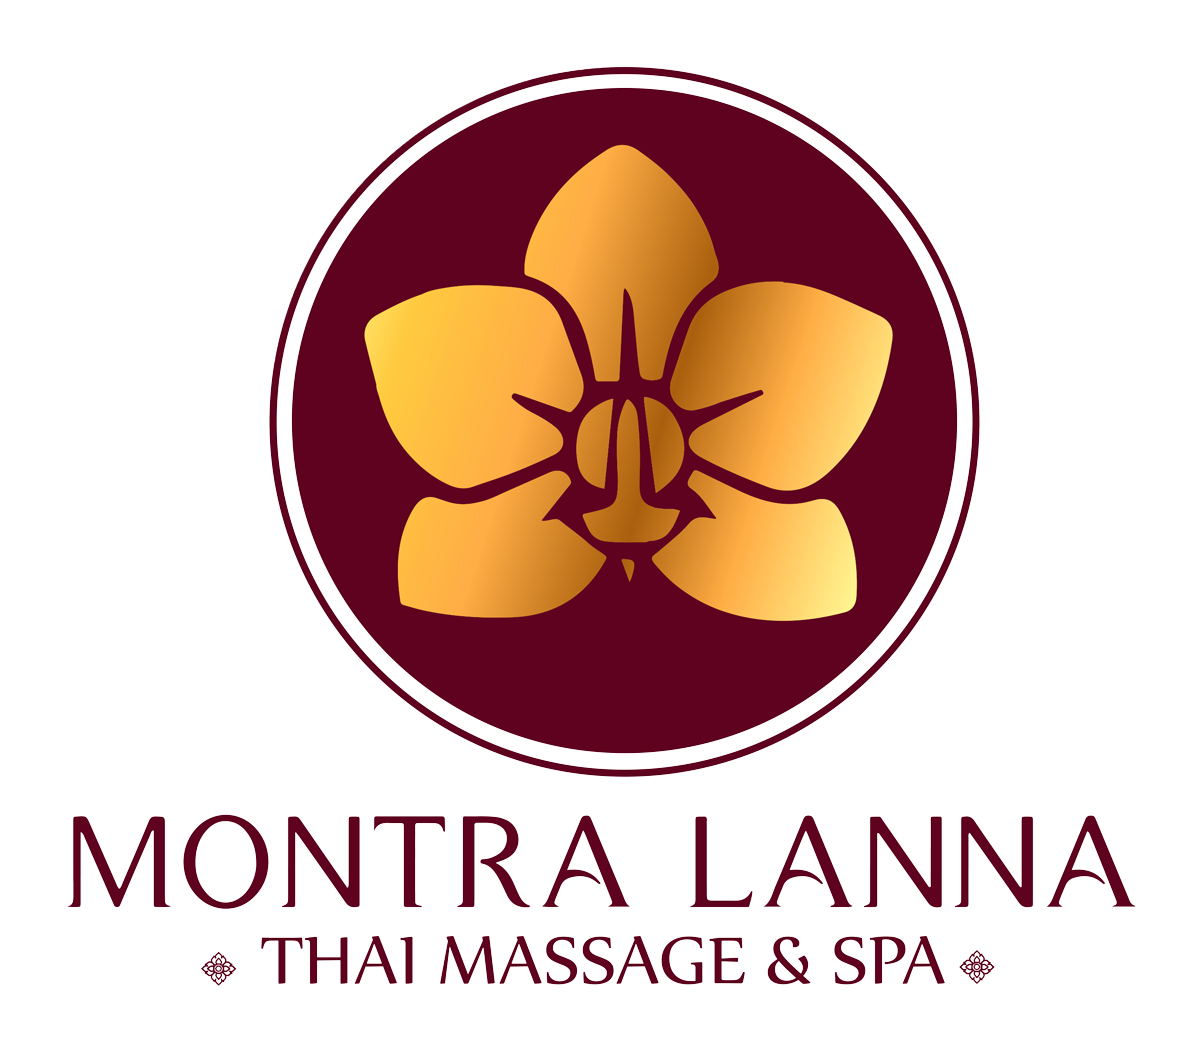 Montra Lanna - Thai Massage & Spa in Zrich Oerlikon